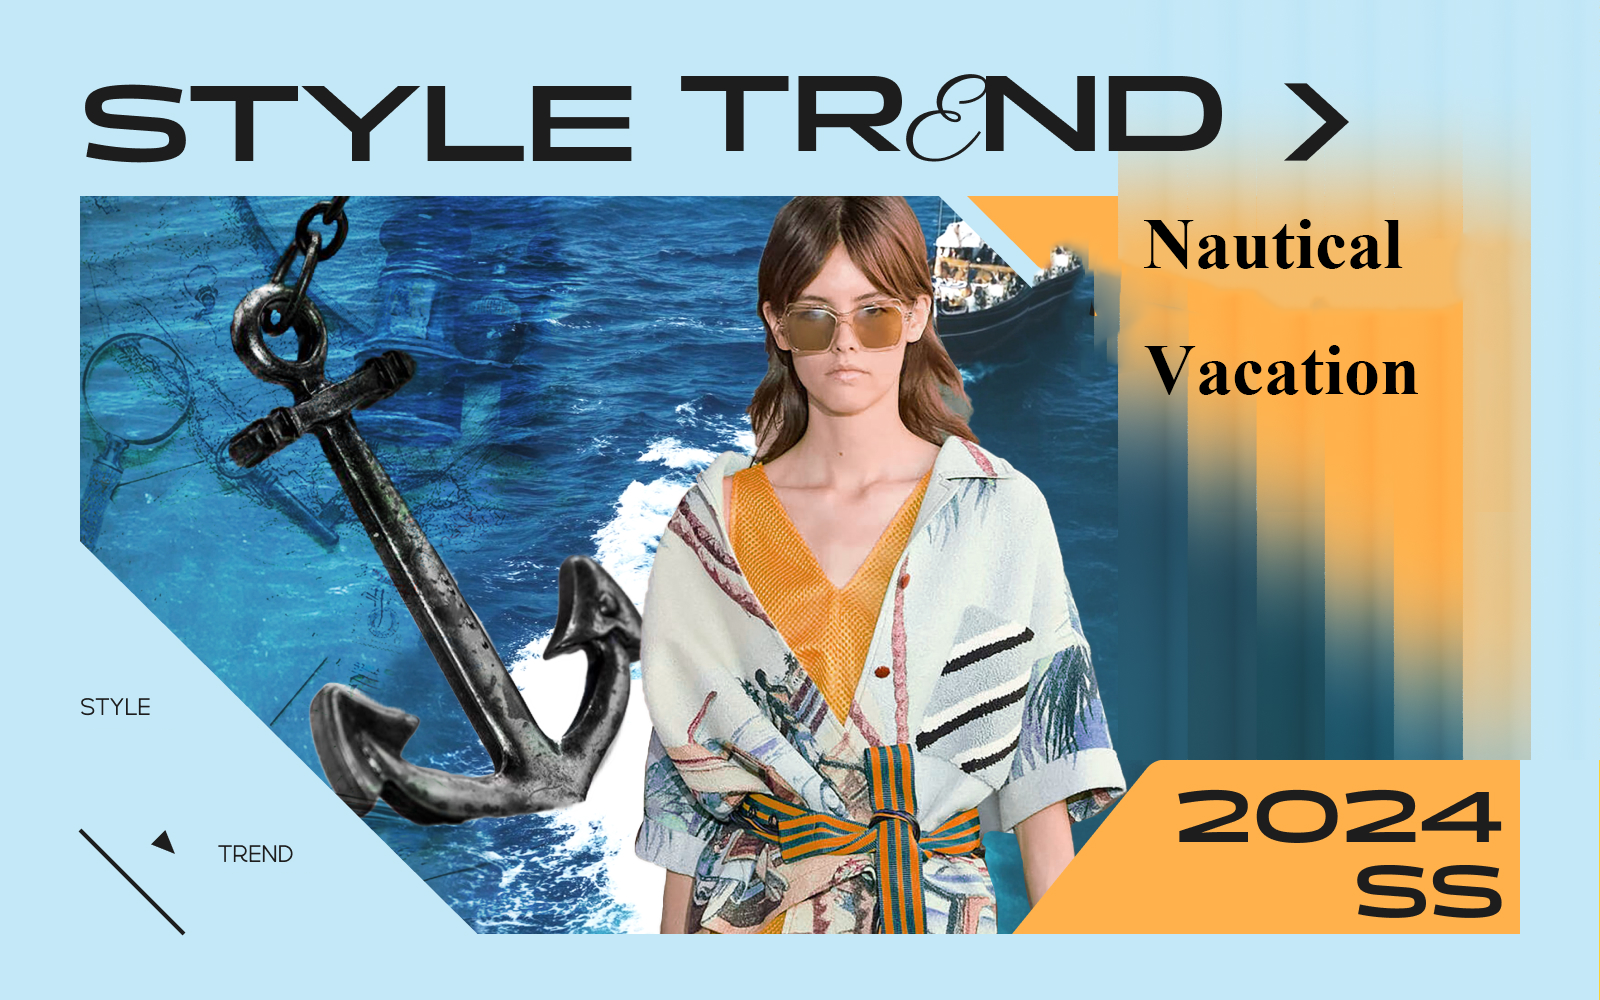 Nautical Vacation -- The Design Development of E-Commerce Womenswear